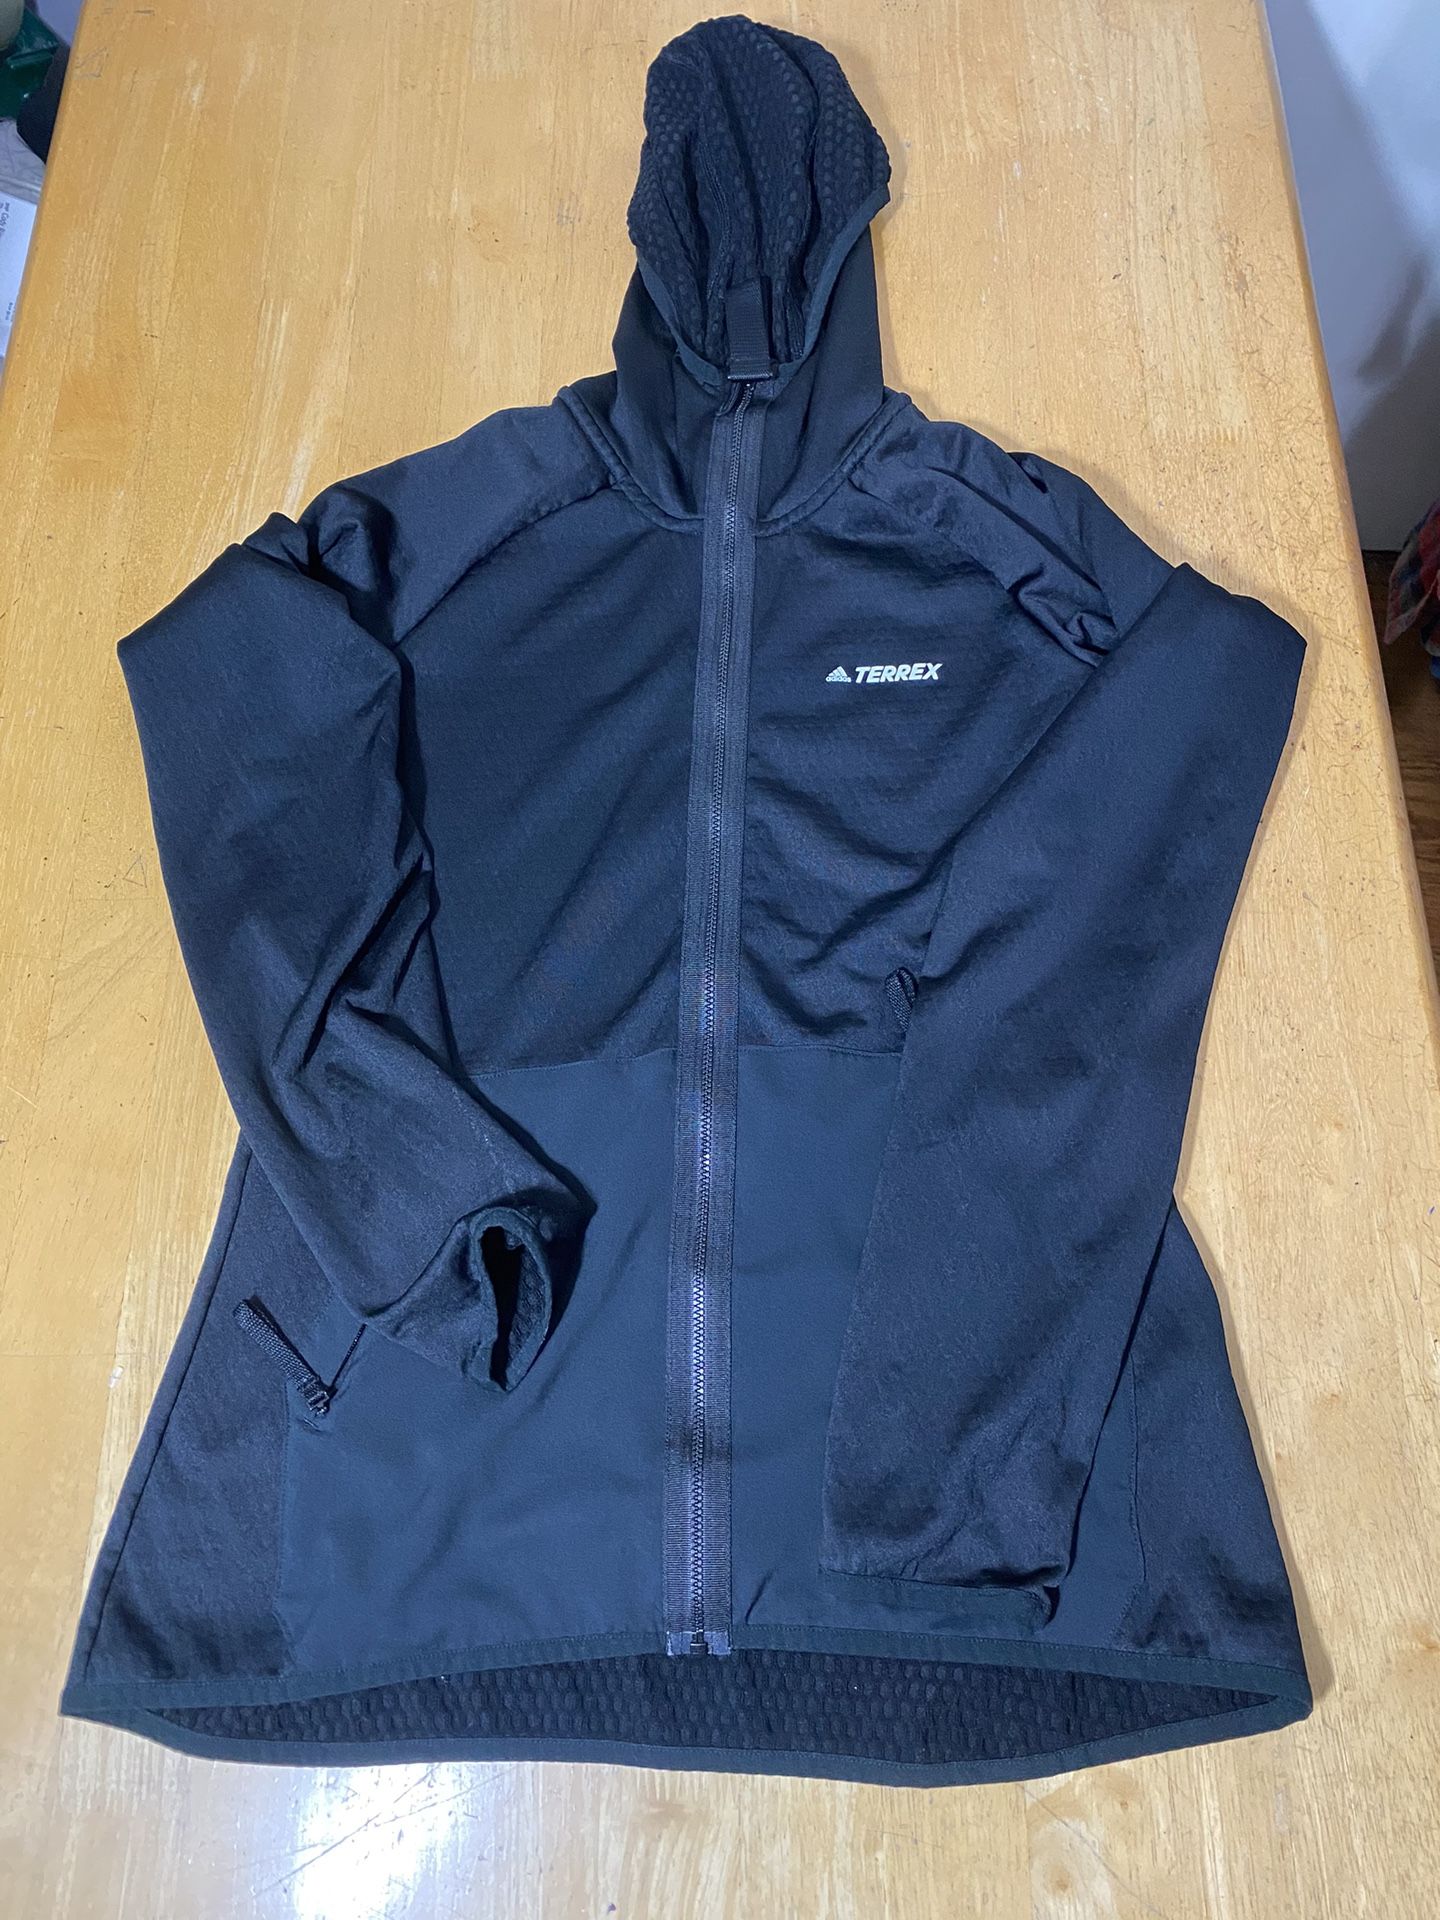 Adidas Womens Black Terrex Tech Fleece Hooded Hiking Jacket Size M 17.5pit2pit